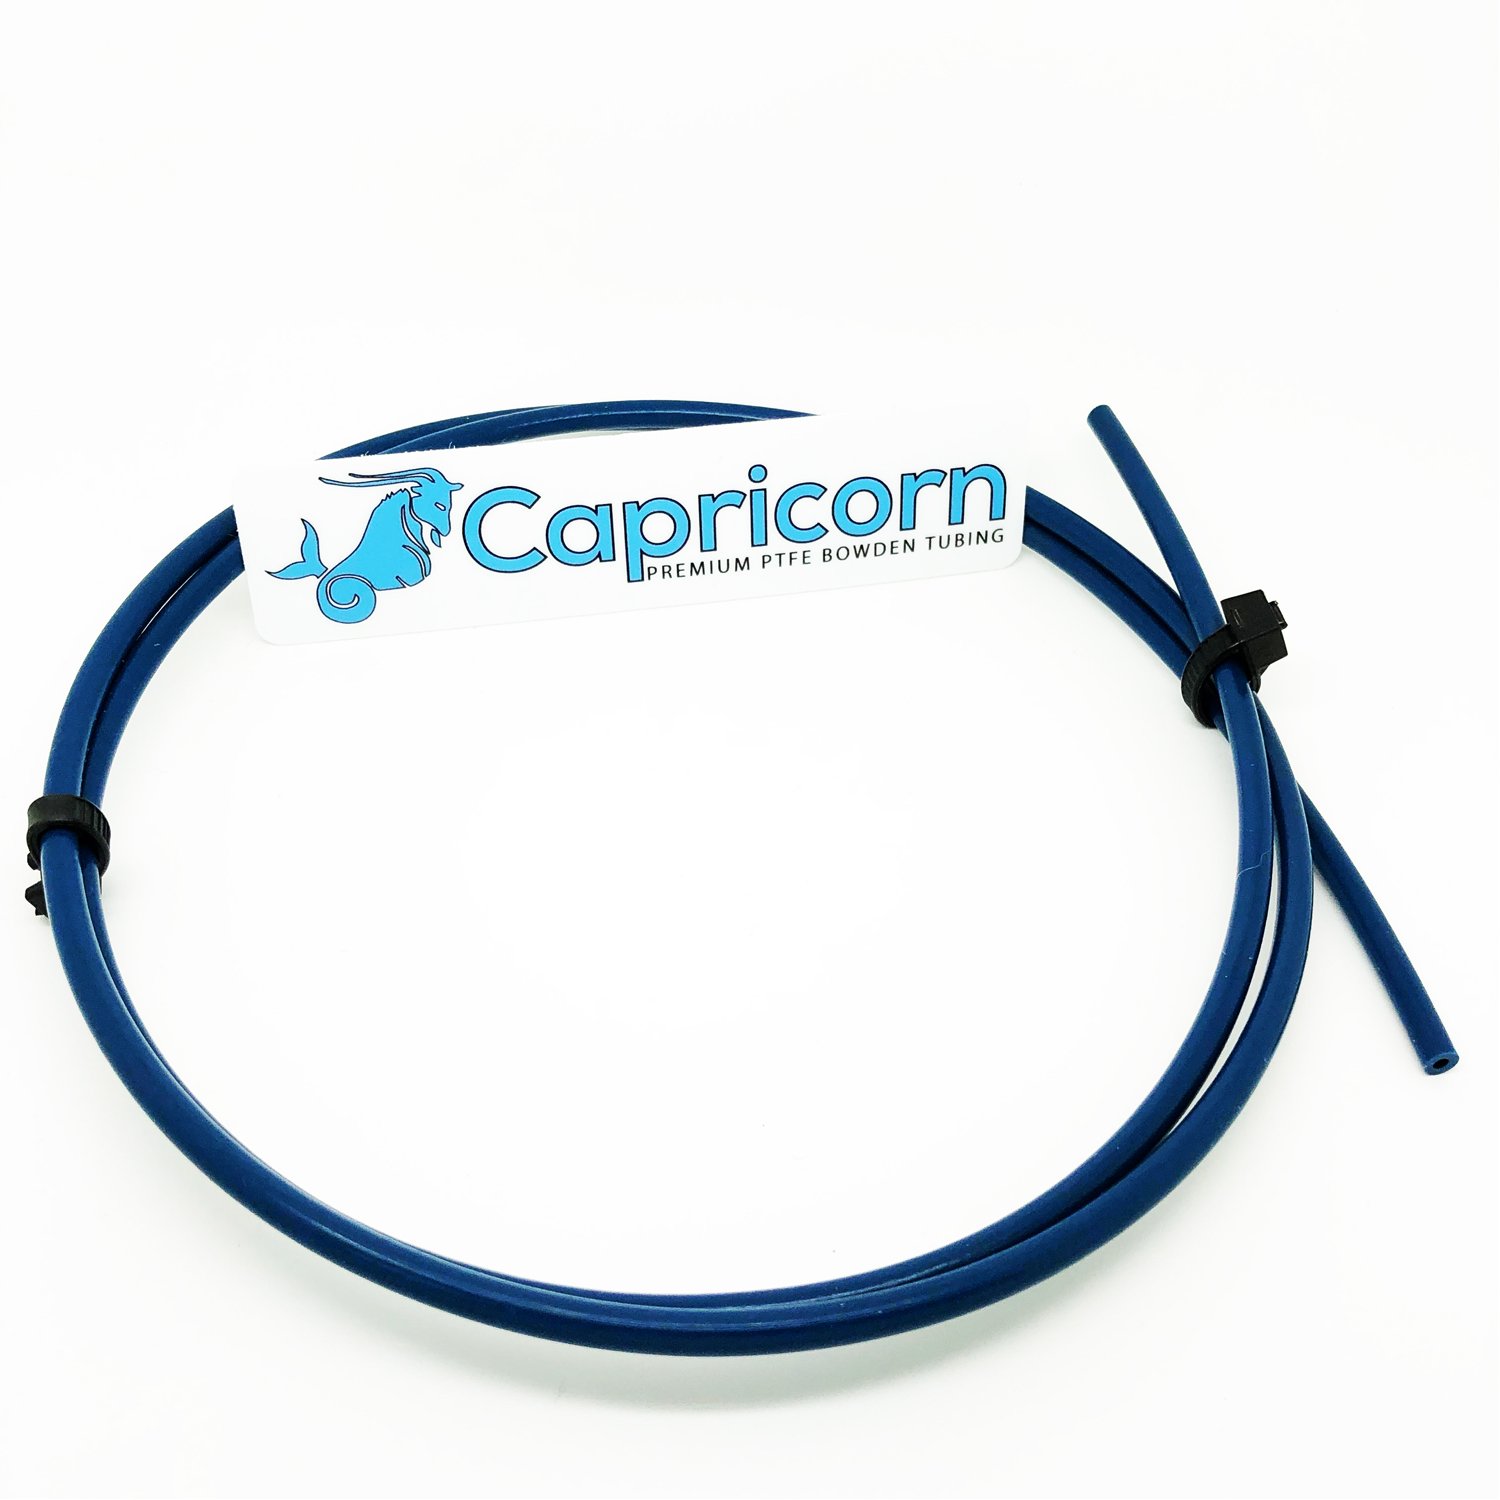 Capricorn XS PTFE Tube 1,75mm Valgfri lengde